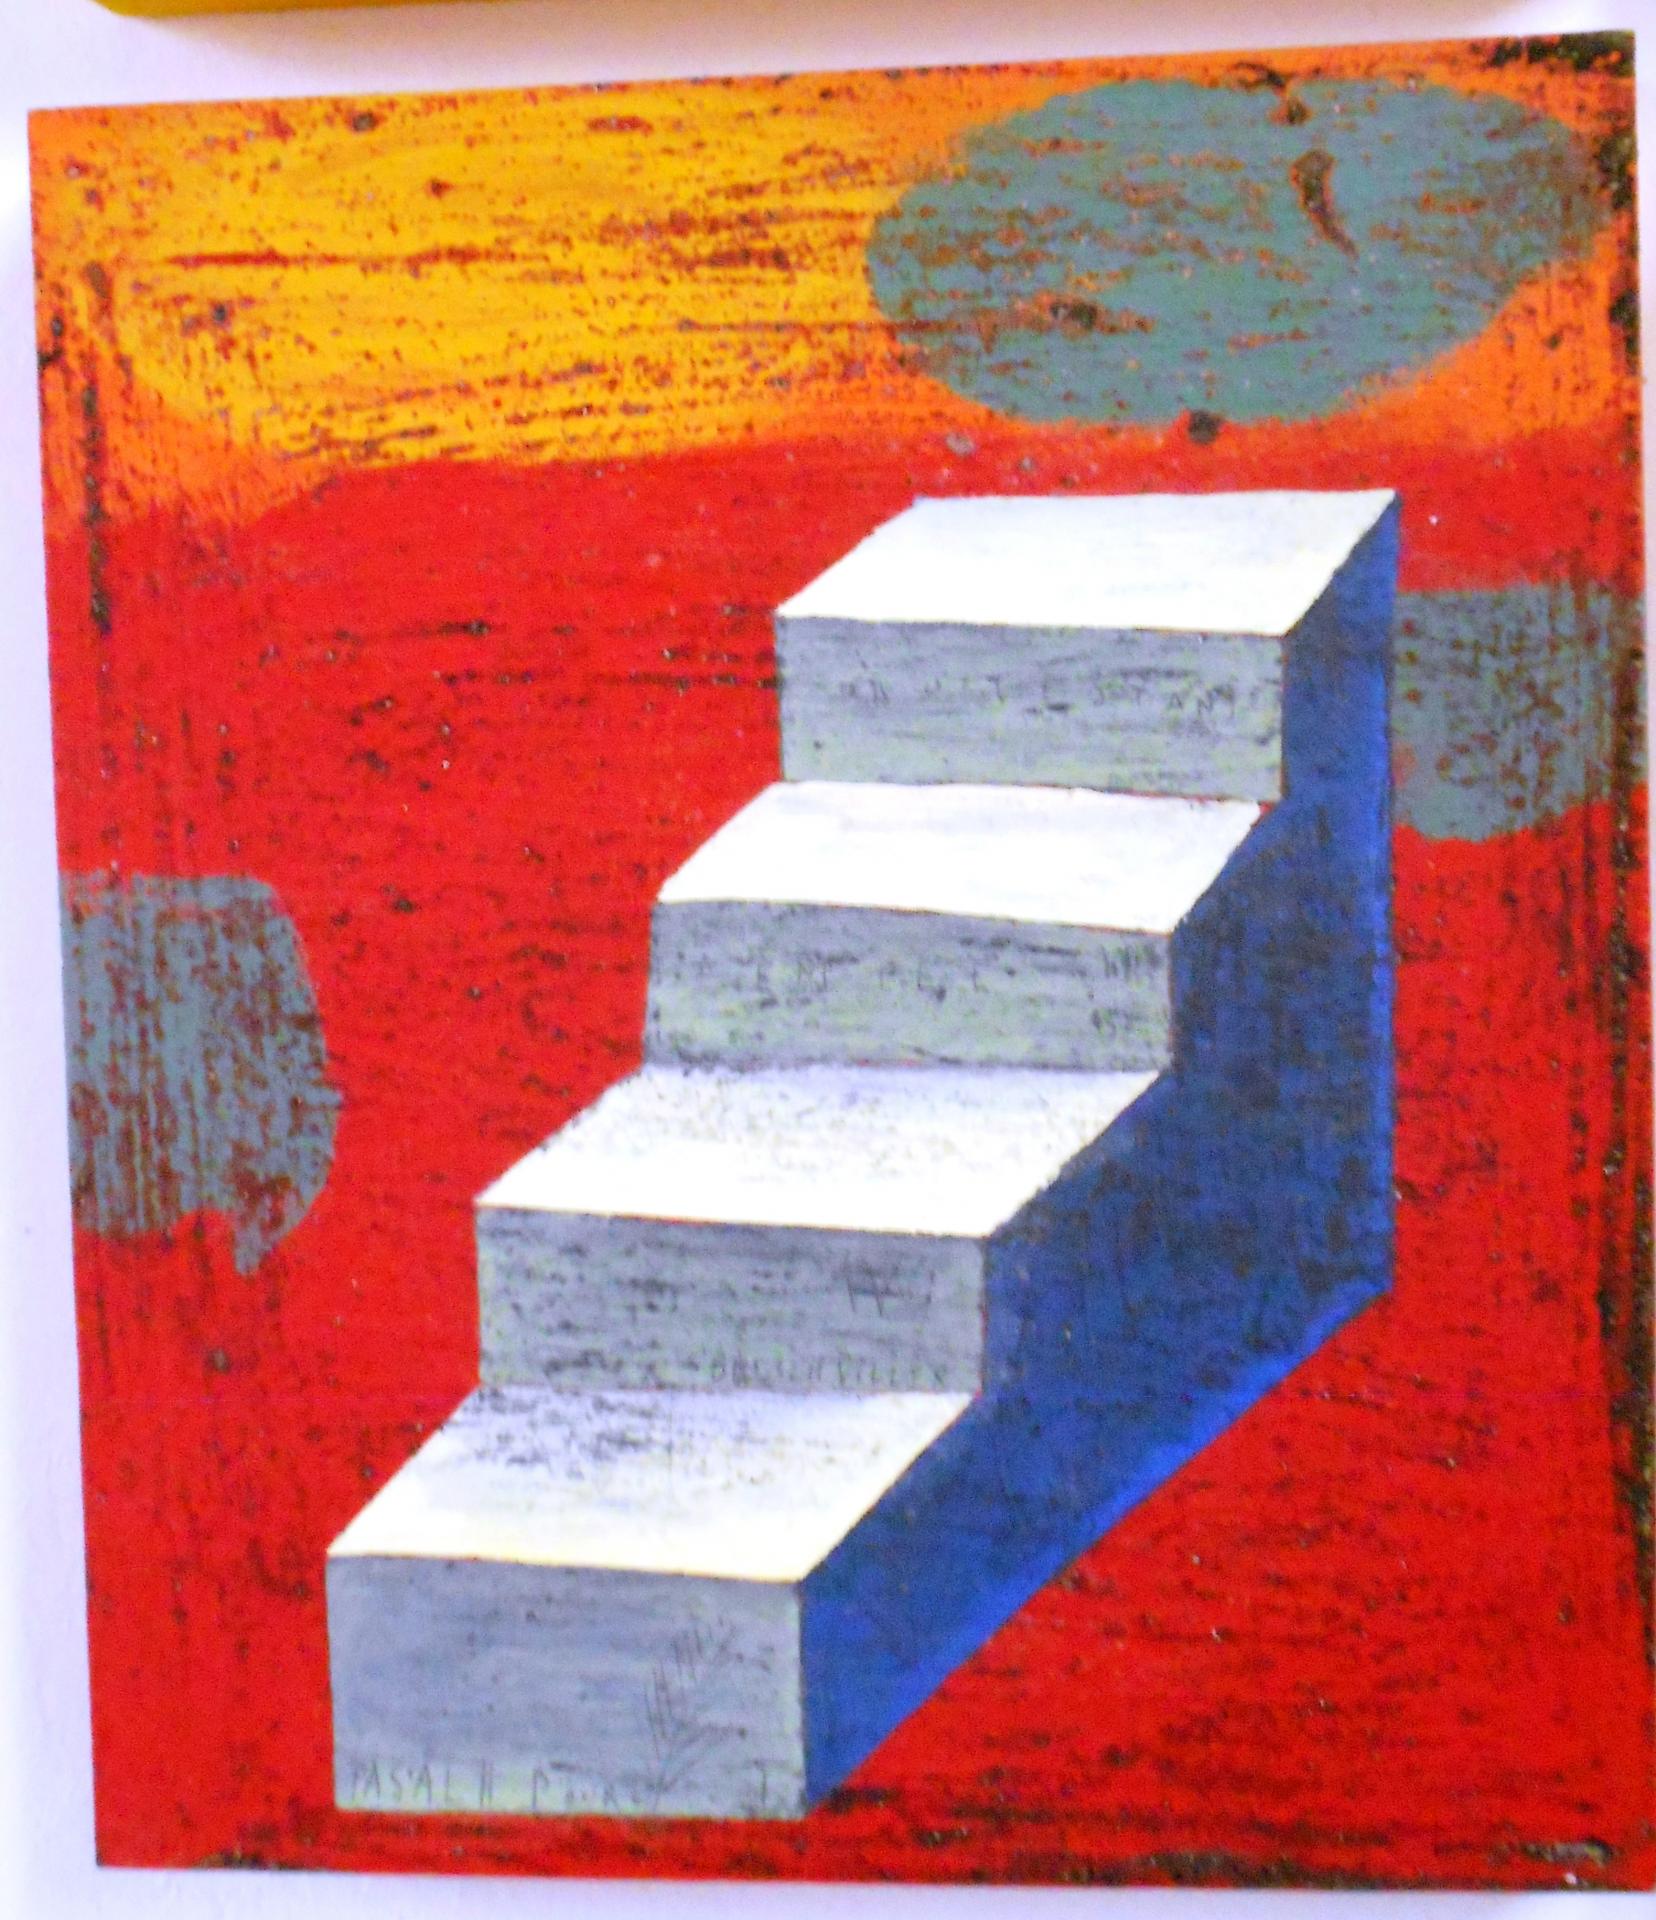 Escalier bleu fond rouge